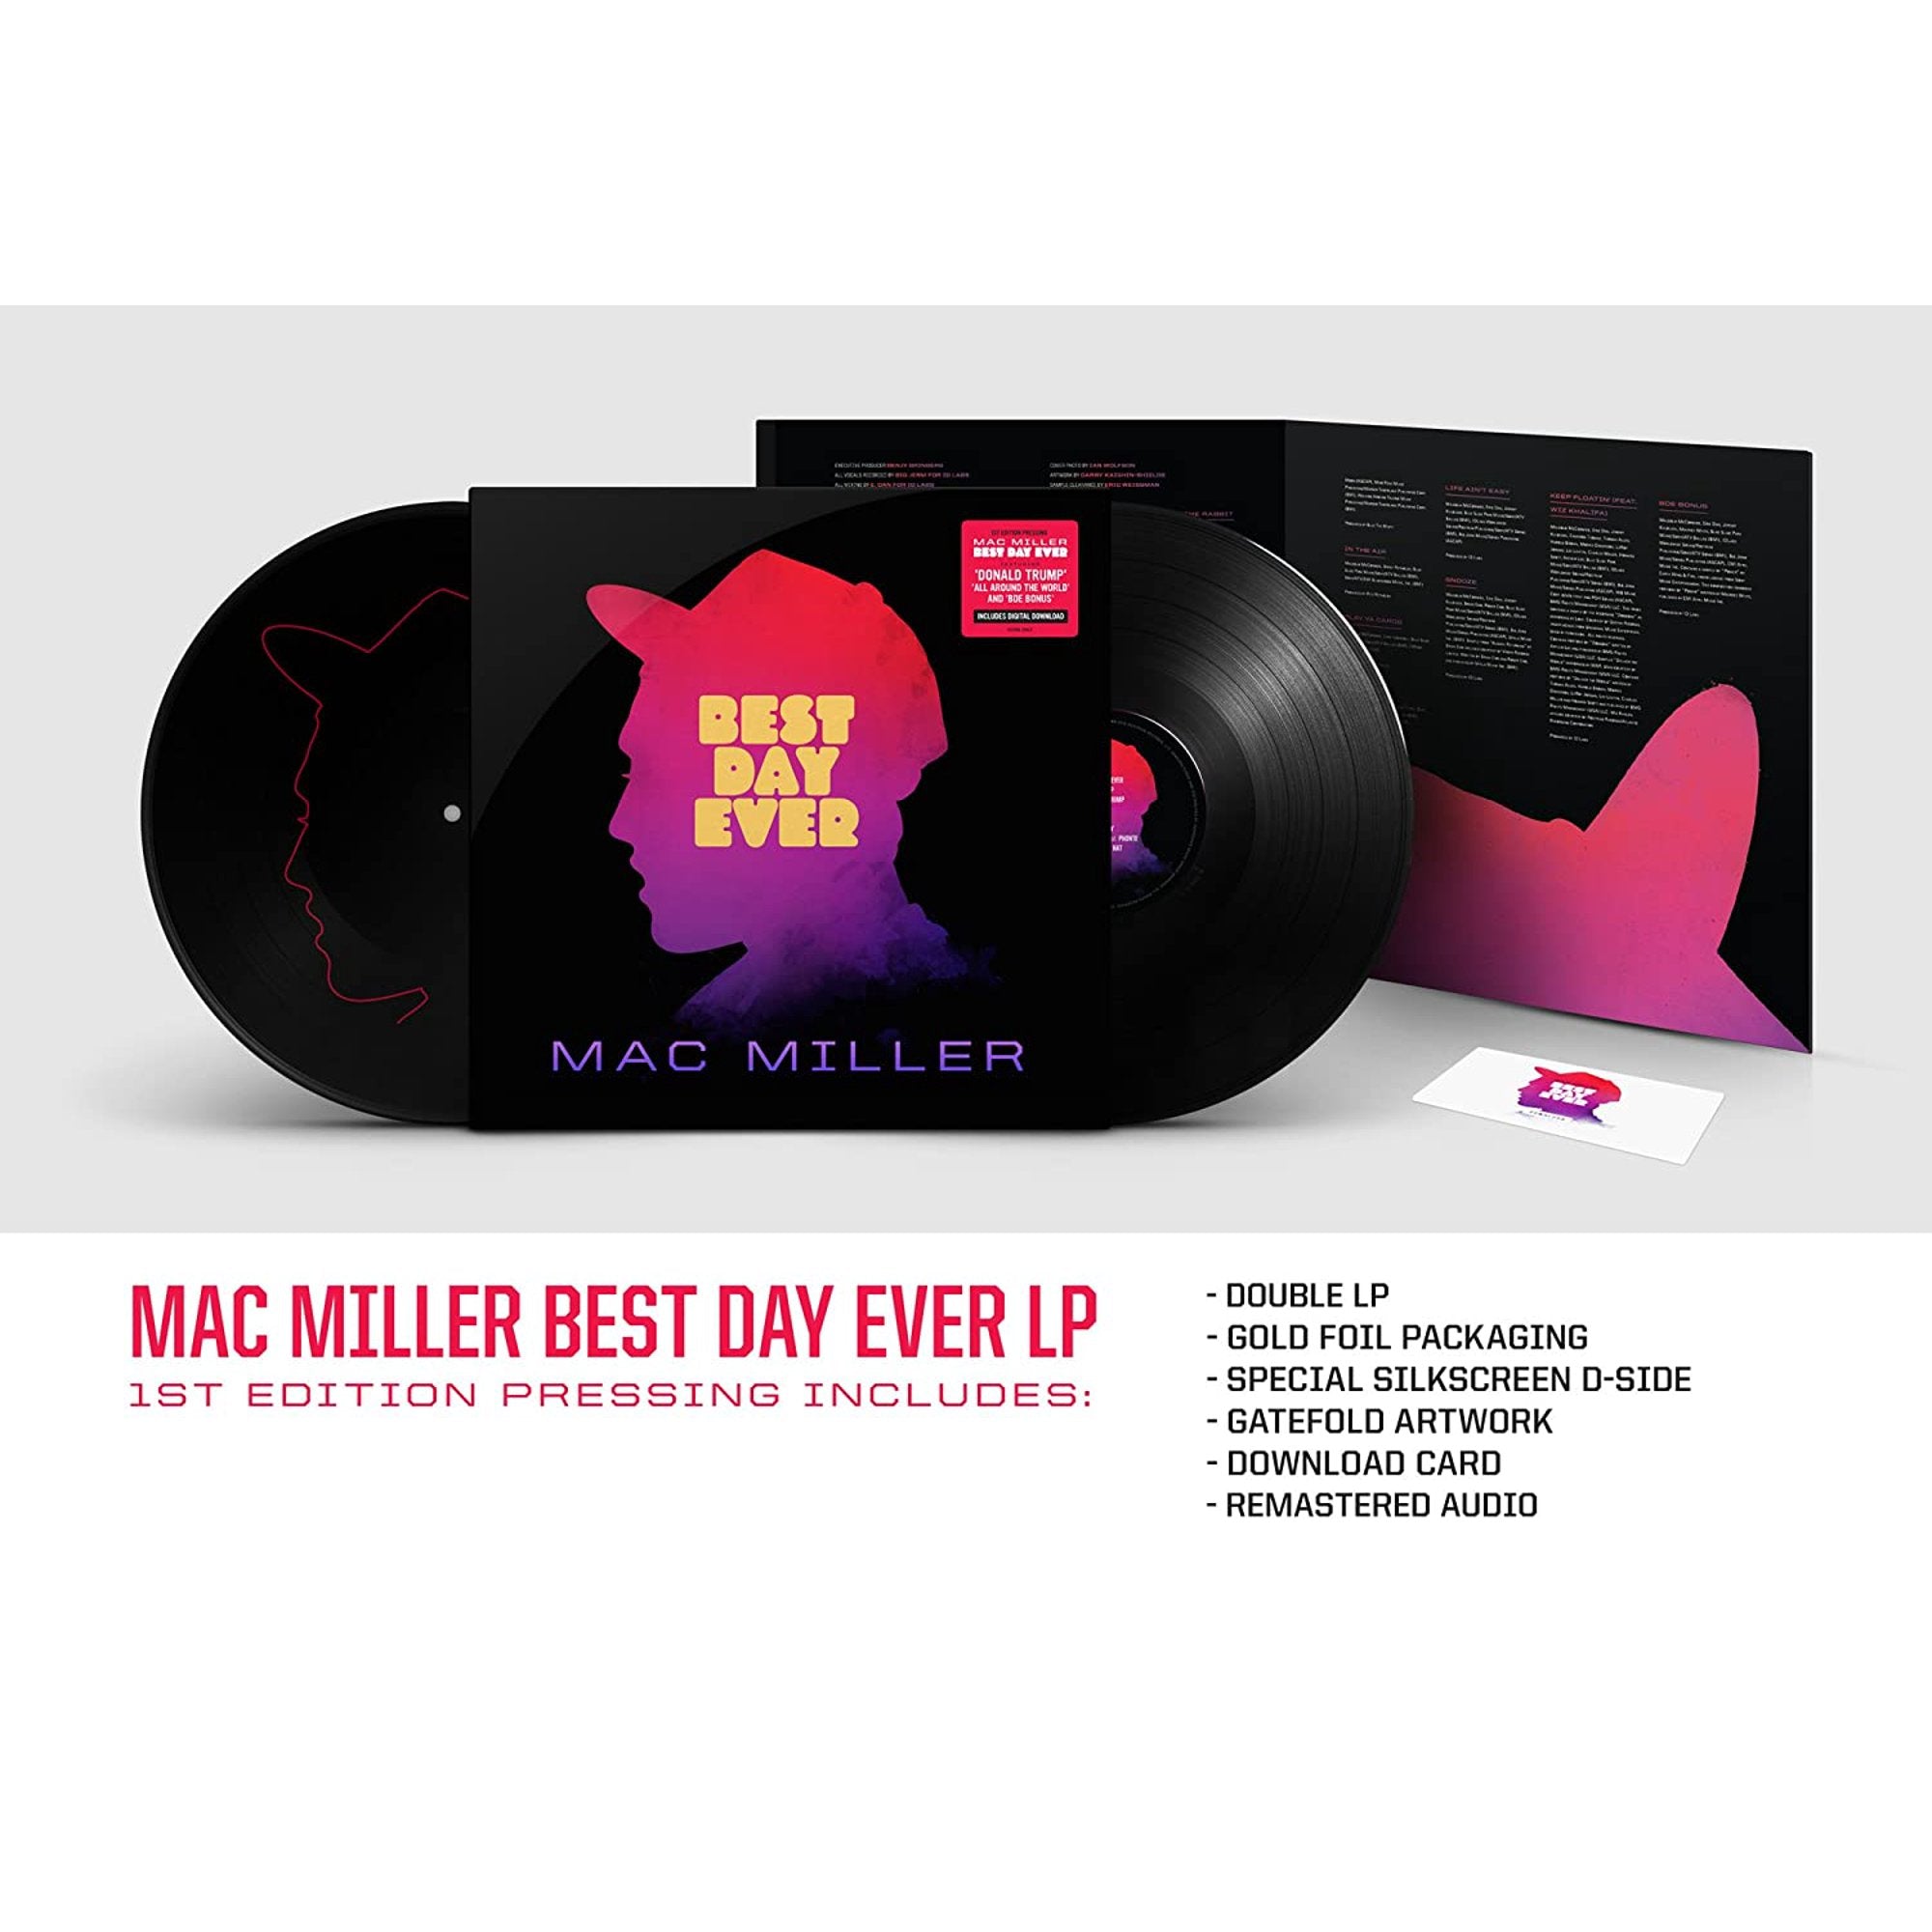 Mac Miller Best Day Ever